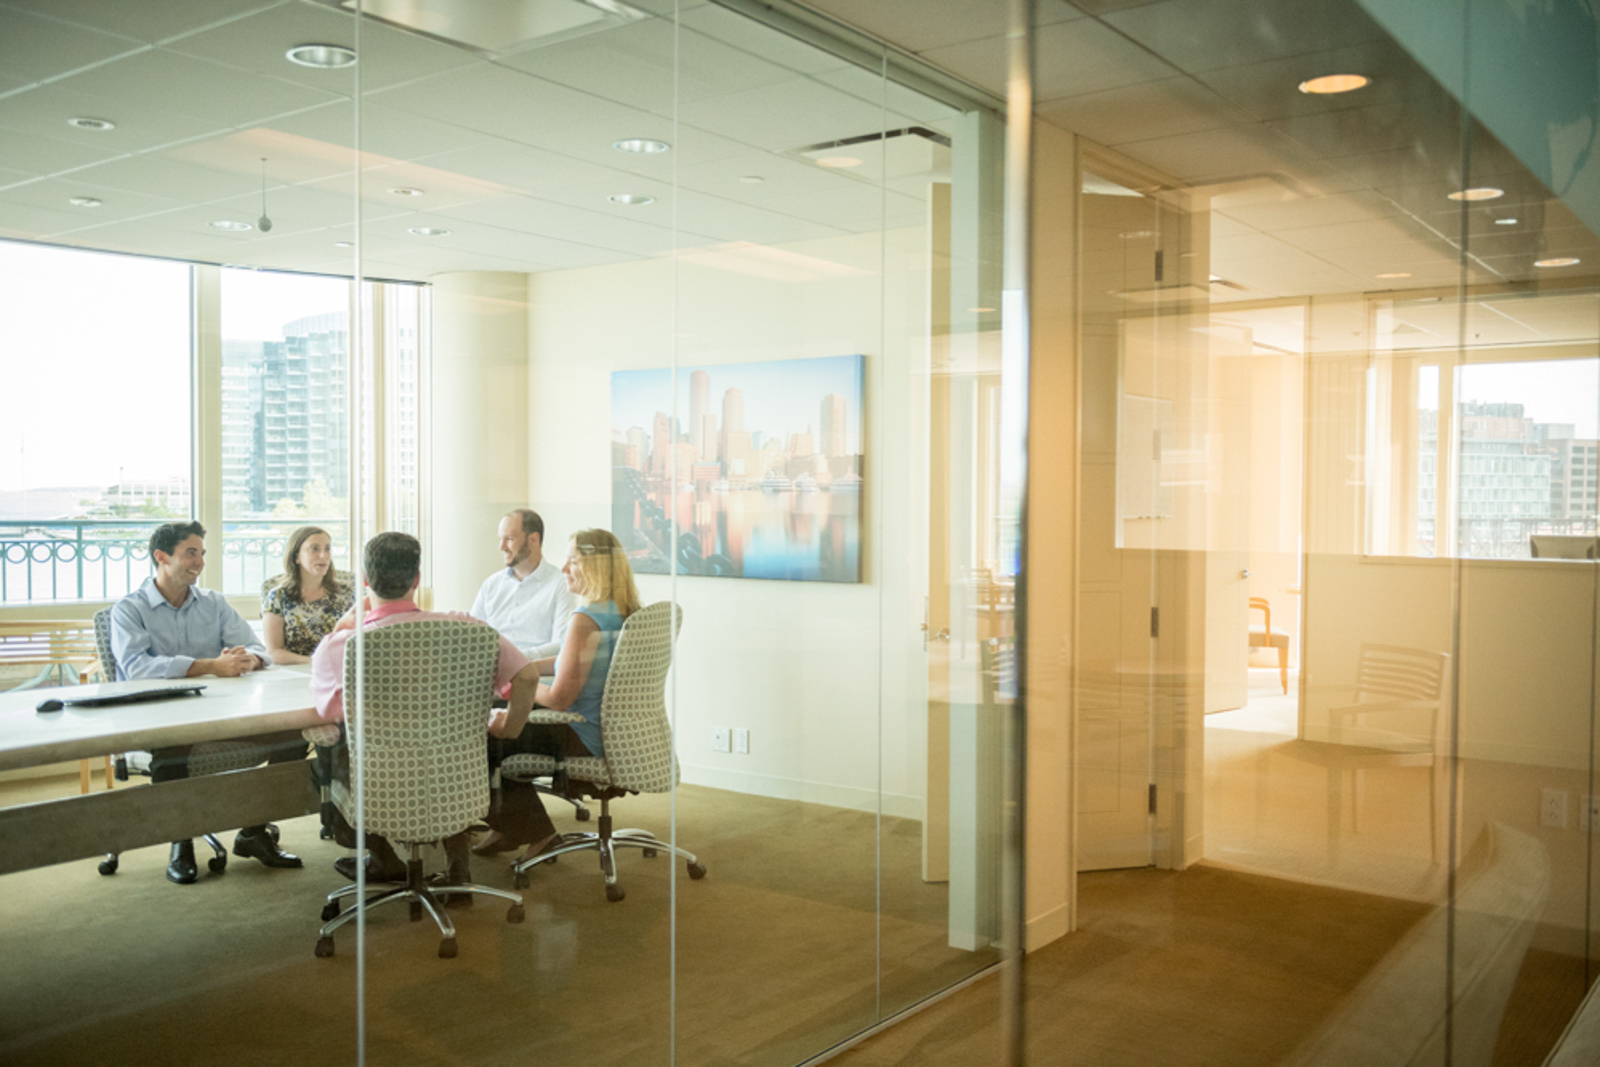 Image of an office meeting seen through a window